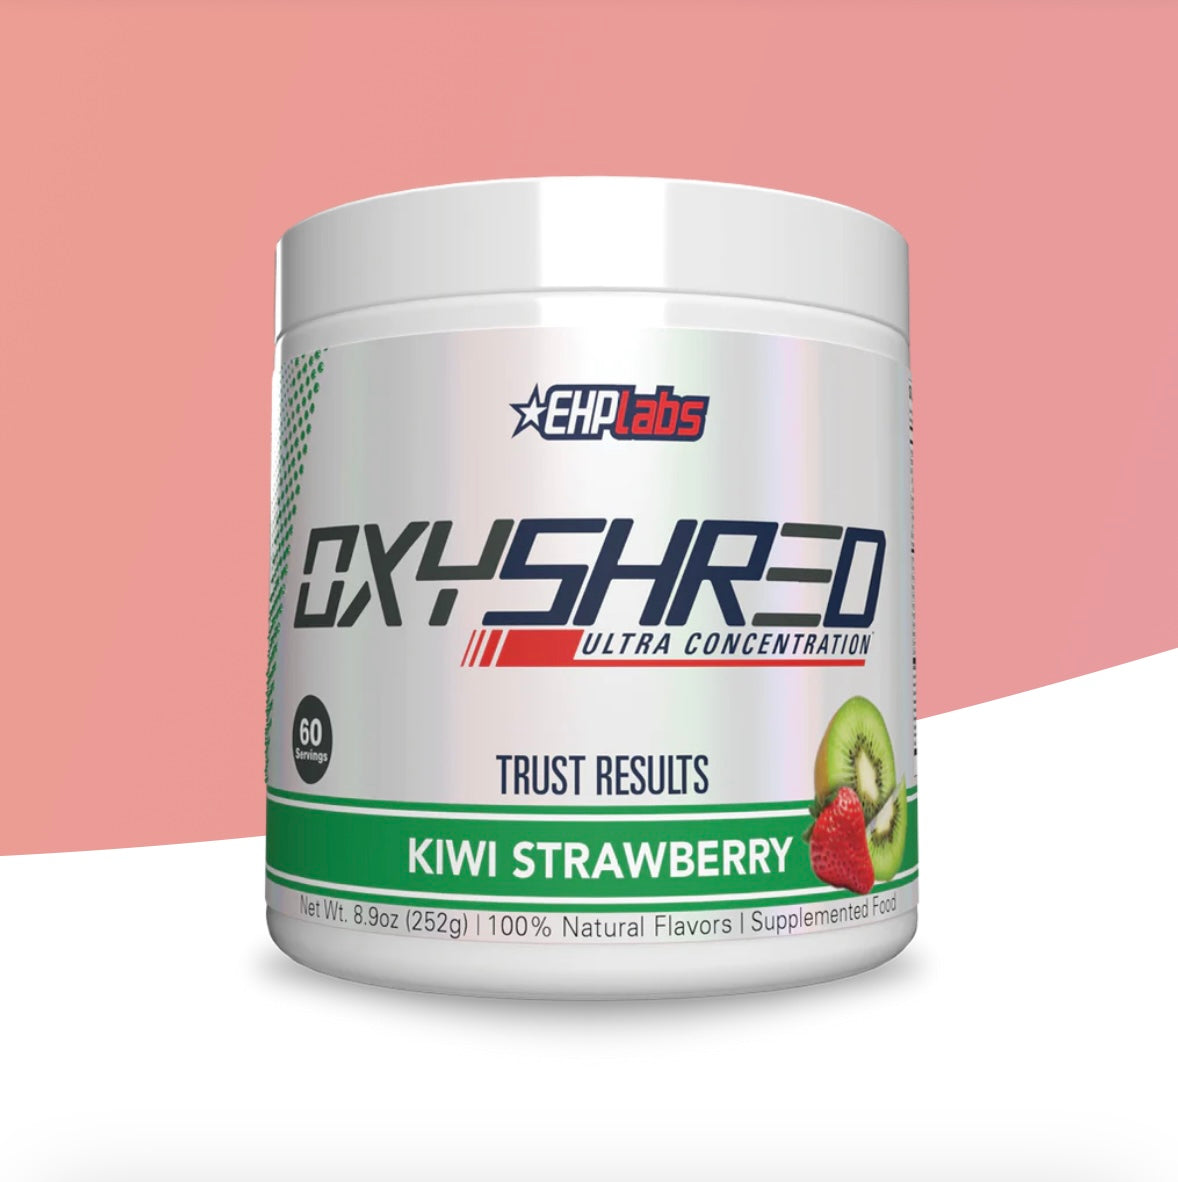 OxyShred Ultra Concentration - Kiwi Strawberry